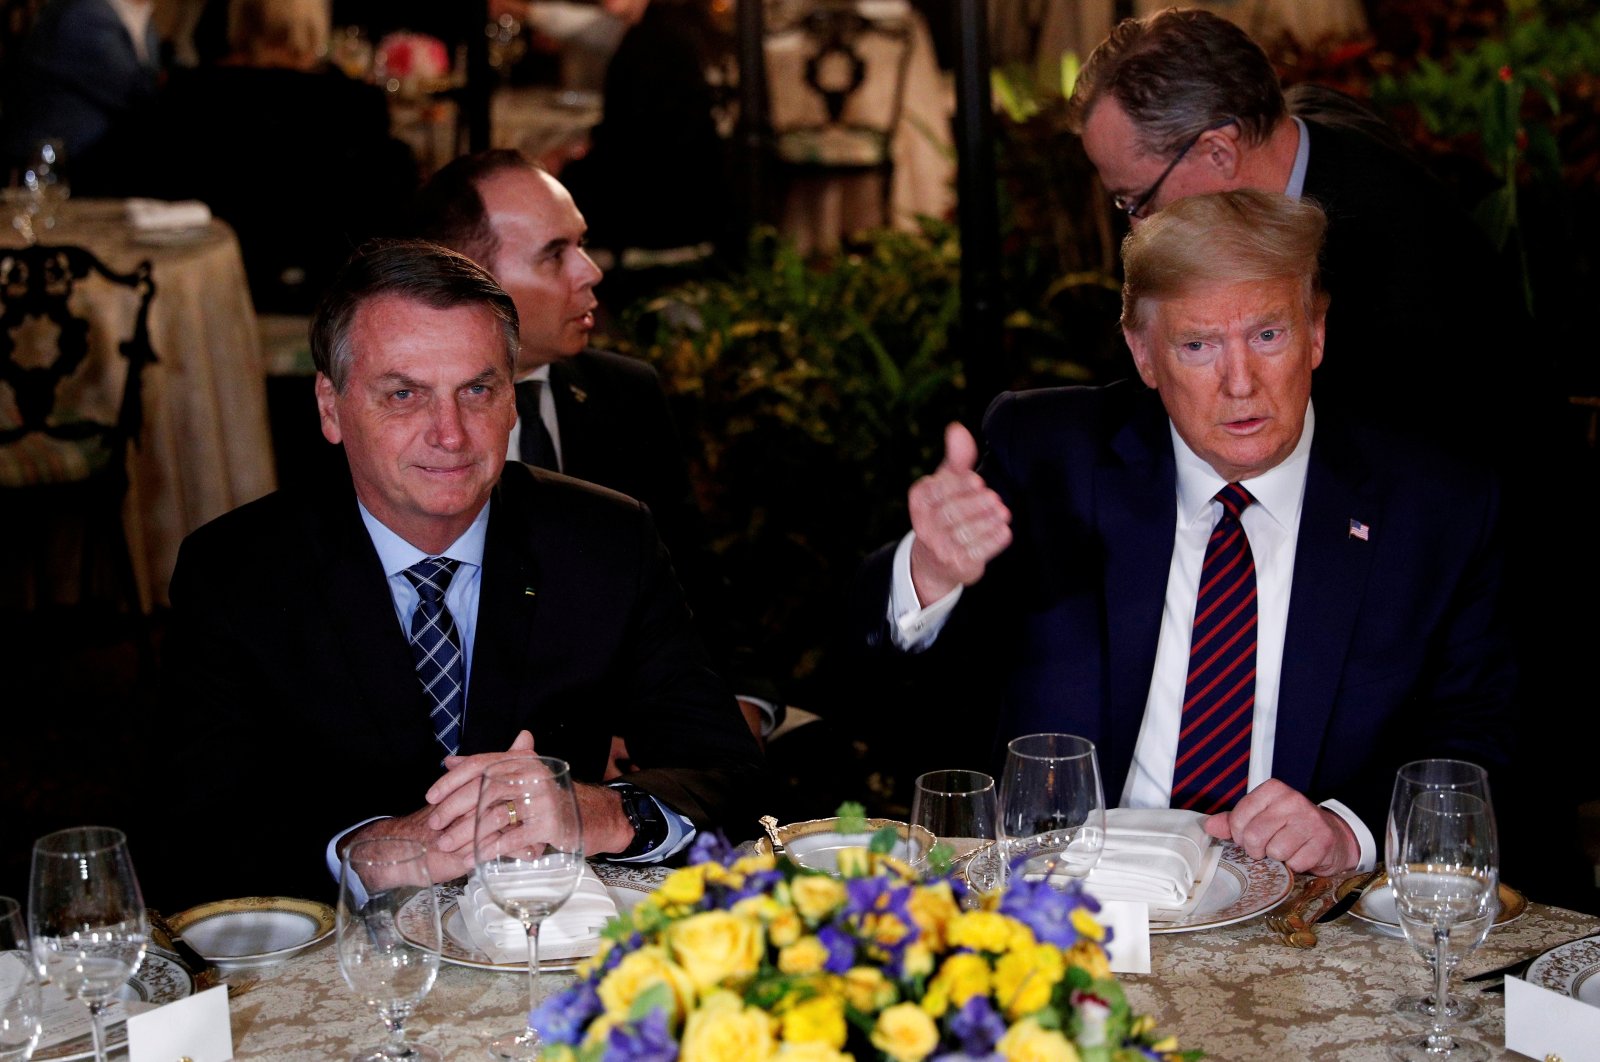 U.S. President Donald Trump hosts a working dinner with Brazilian President Jair Bolsonaro at the Mar-a-Lago resort, Palm Beach, Florida, U.S., March 7, 2020. (Reuters Photo)